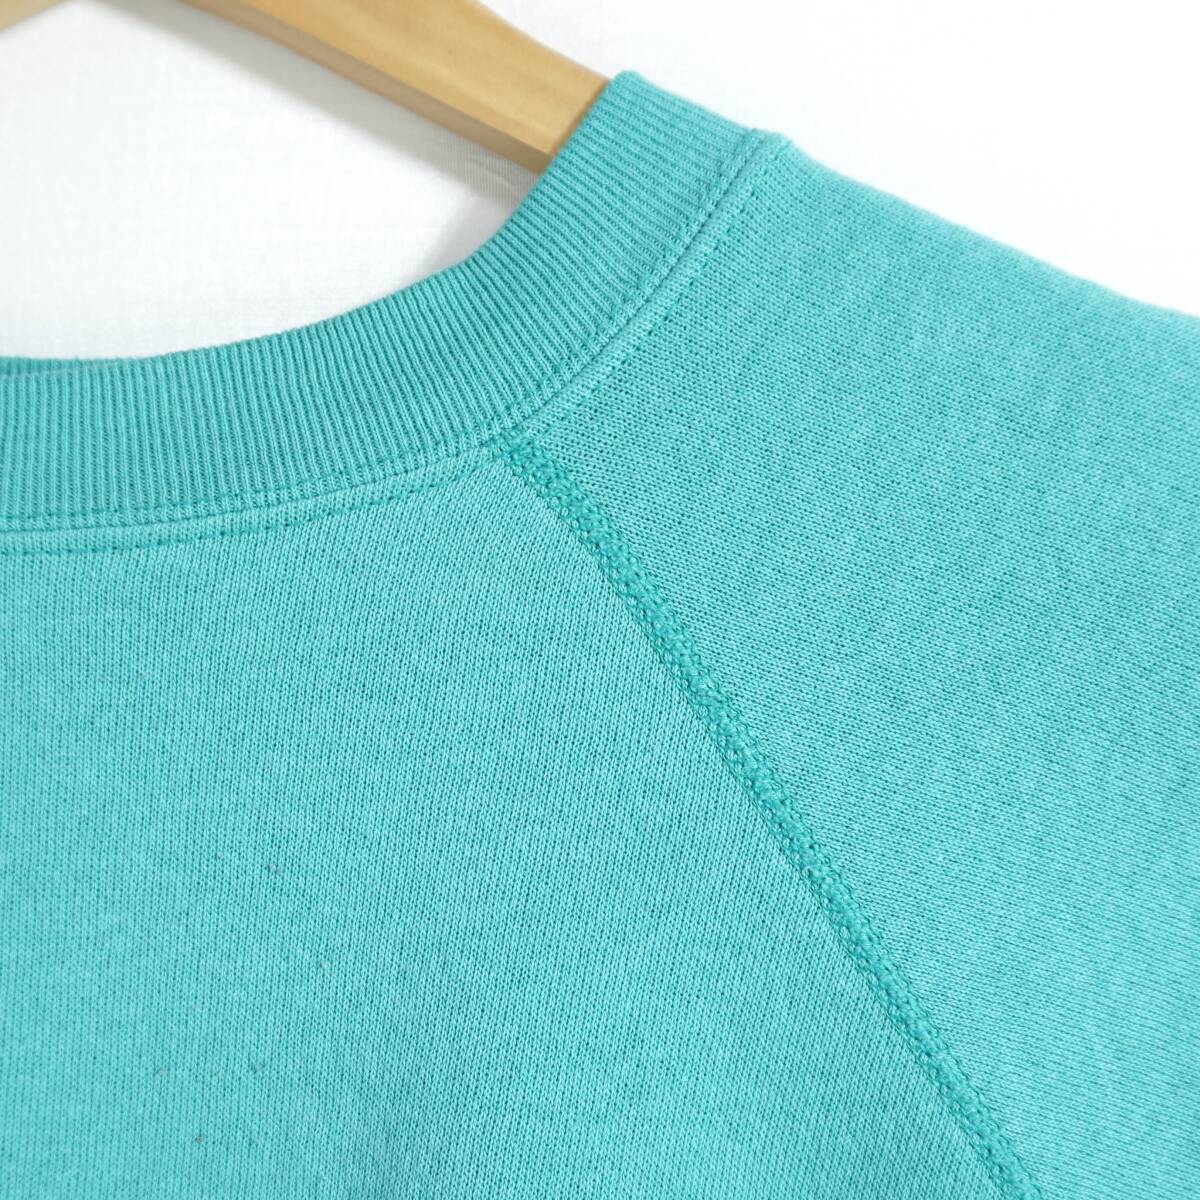 OLD Short Sleeve Sweatshirts 1970s SWT2419 Vintage 半袖スウェット ヴィンテージスウェット ヴィンスウェ 1970年代 アメリカ製_画像4